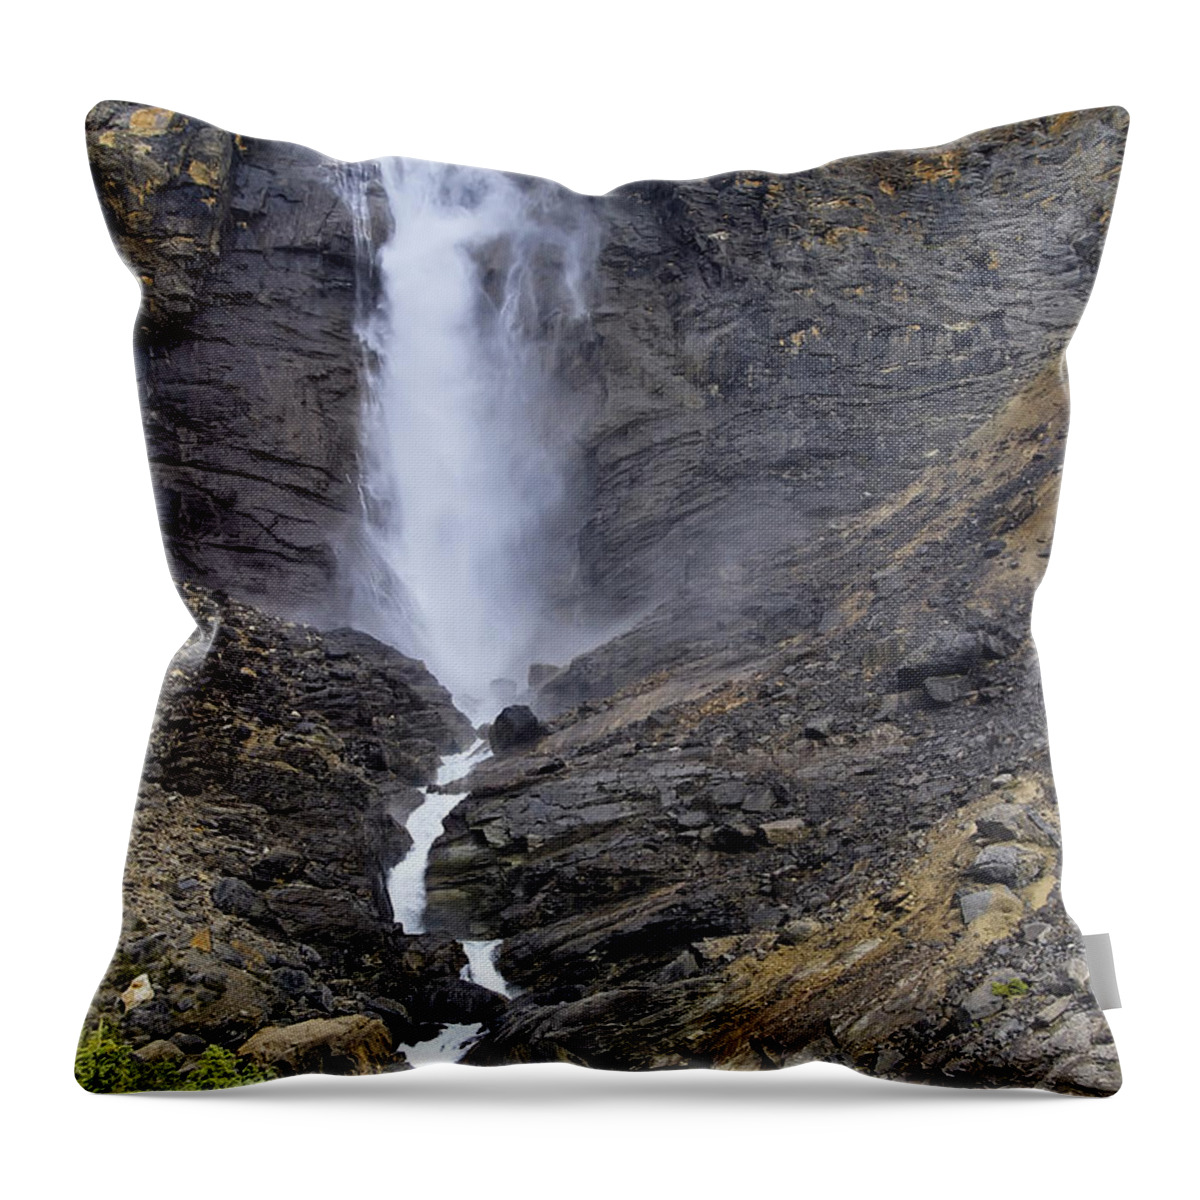 Takkakaw Falls Throw Pillow featuring the photograph Takkakaw Falls by Teresa Zieba